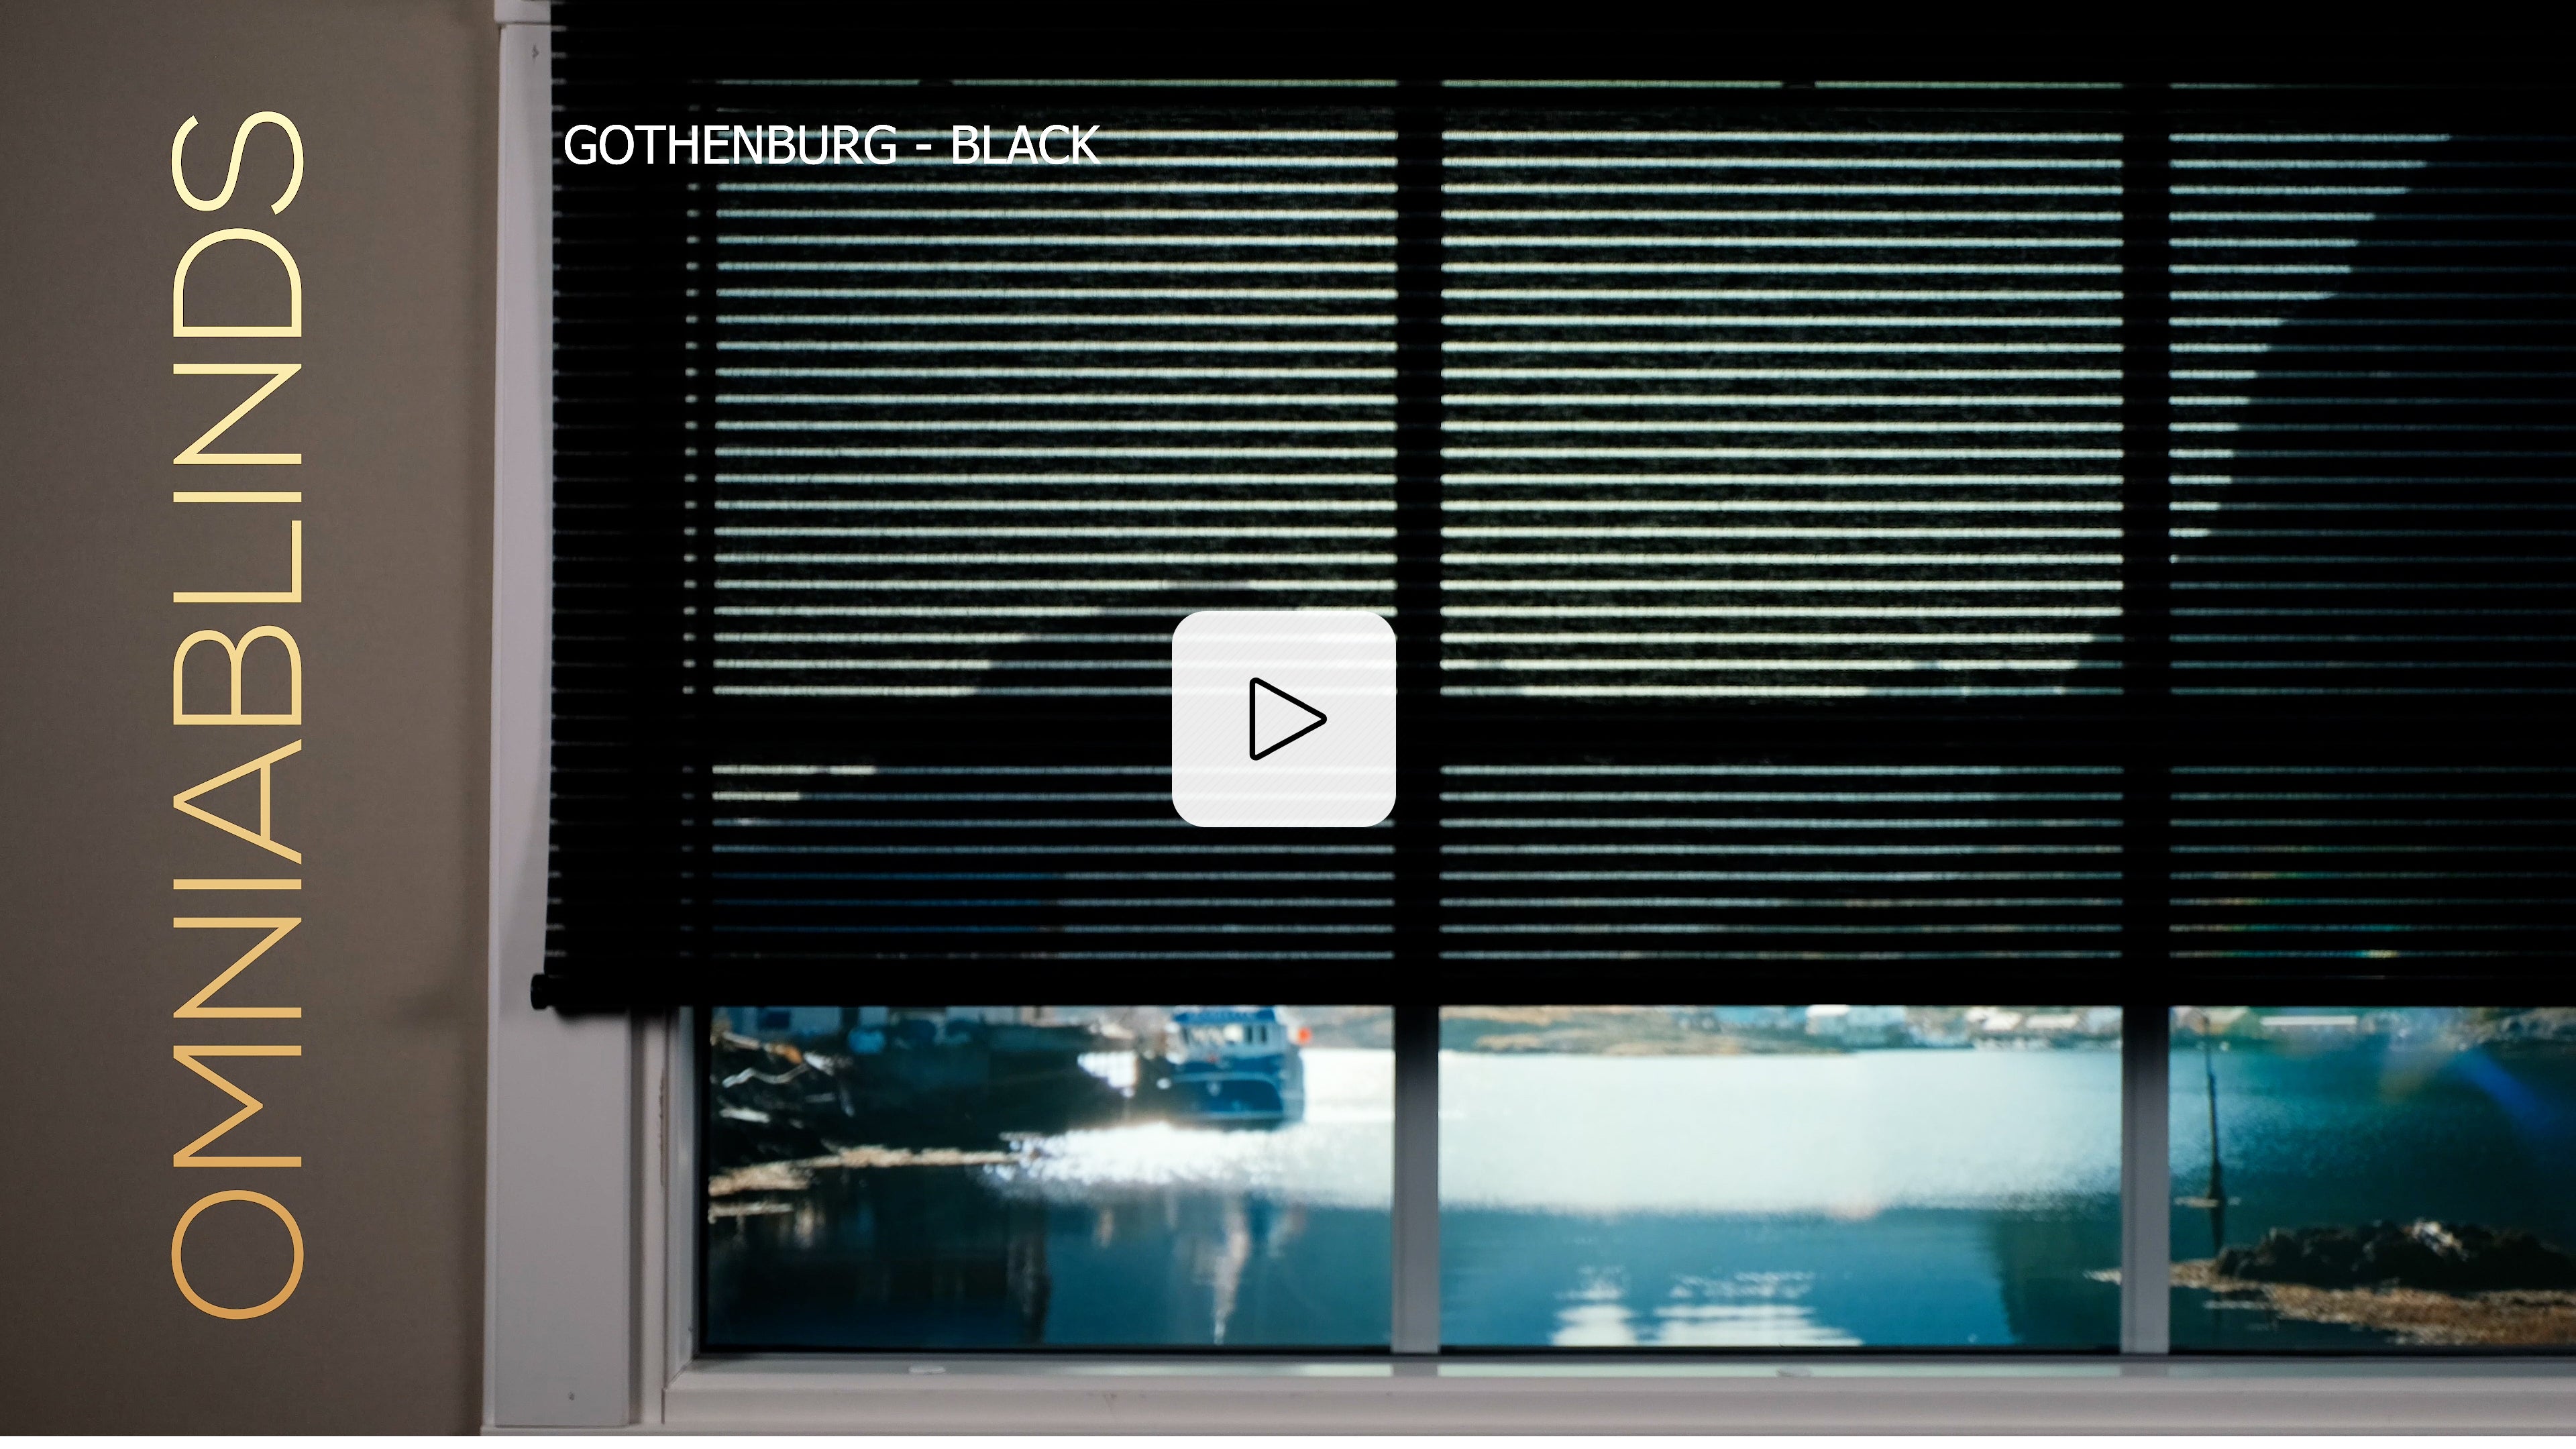 Gothenburg - Black